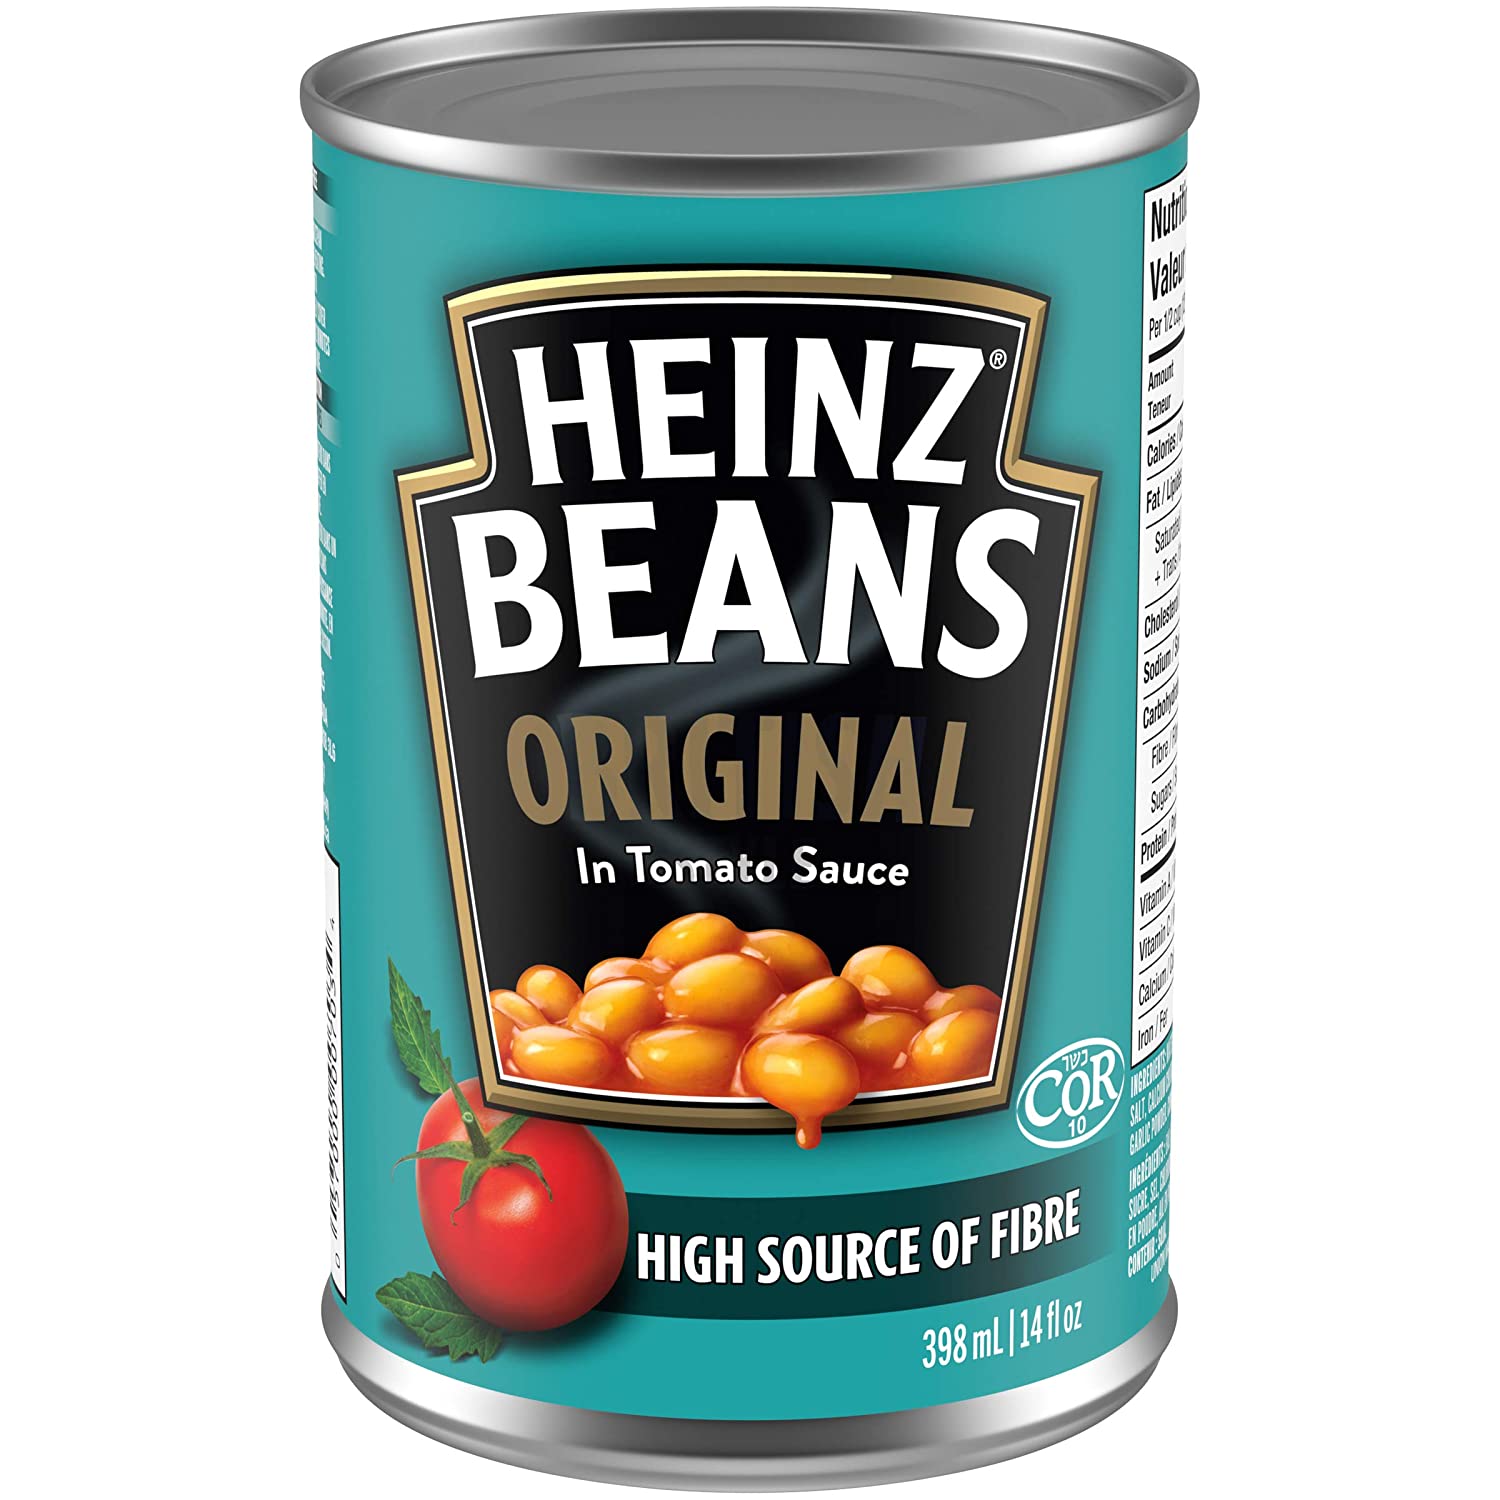 Heinz Beans in Tomato Sauce (398ml)